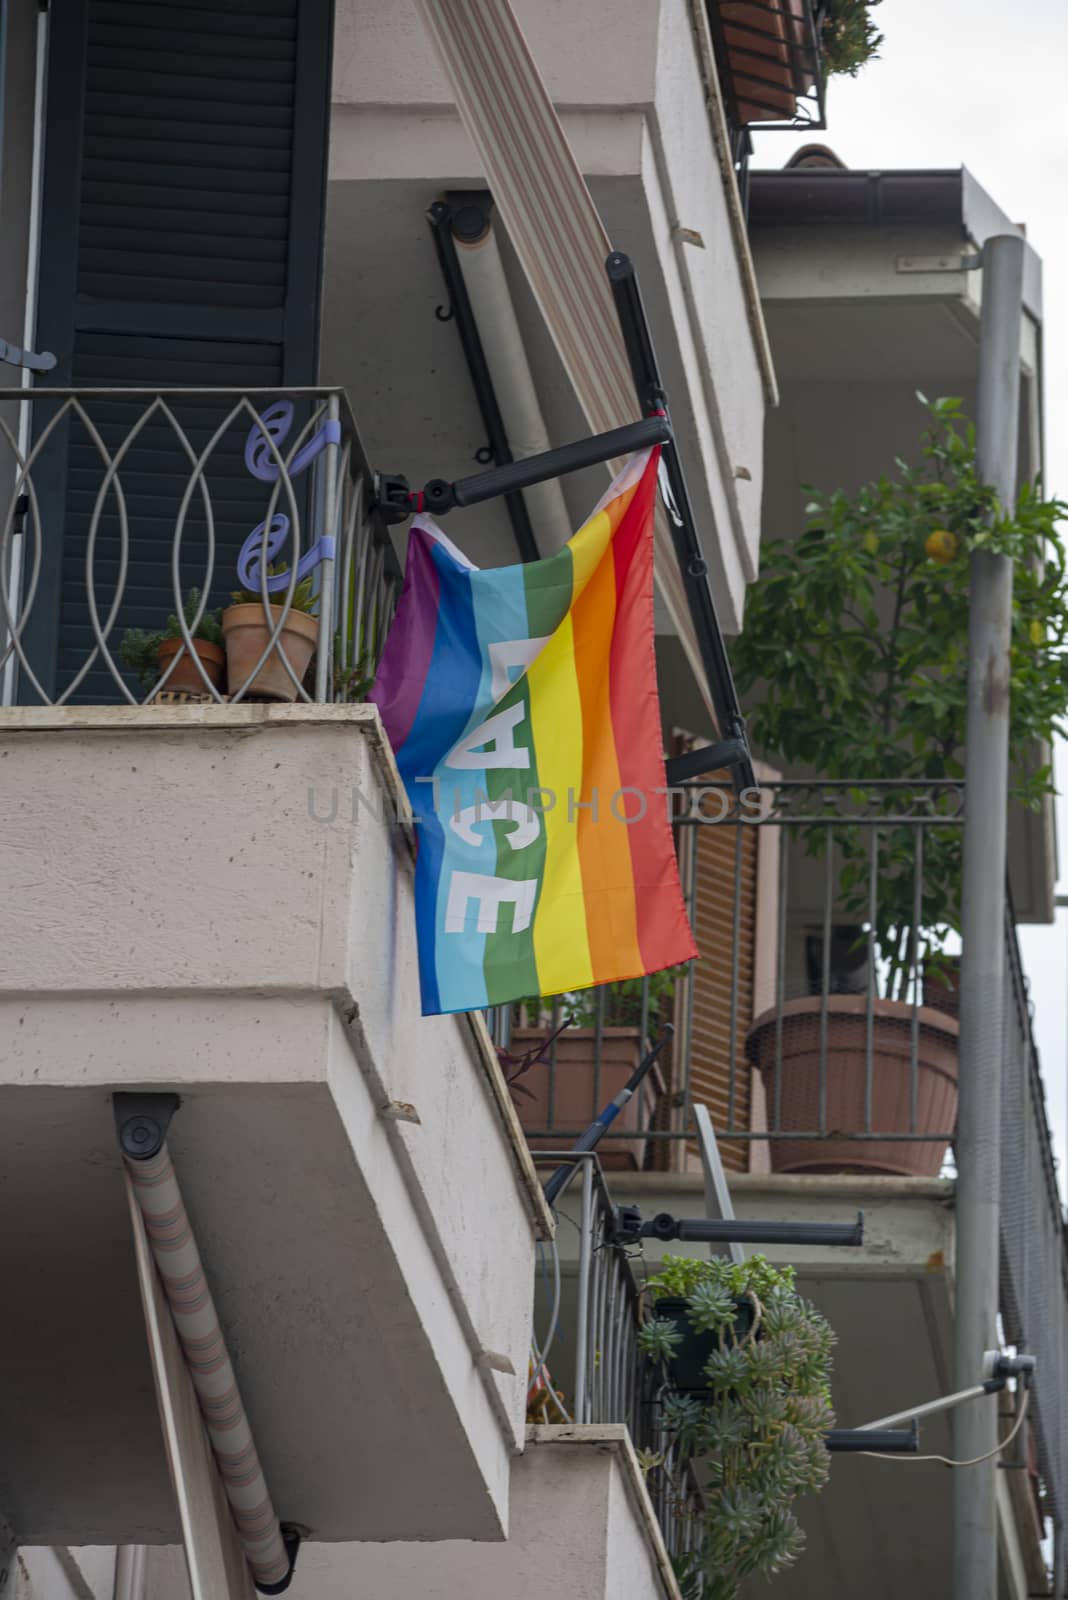 peace flag placed on a balcony of a house by carfedeph